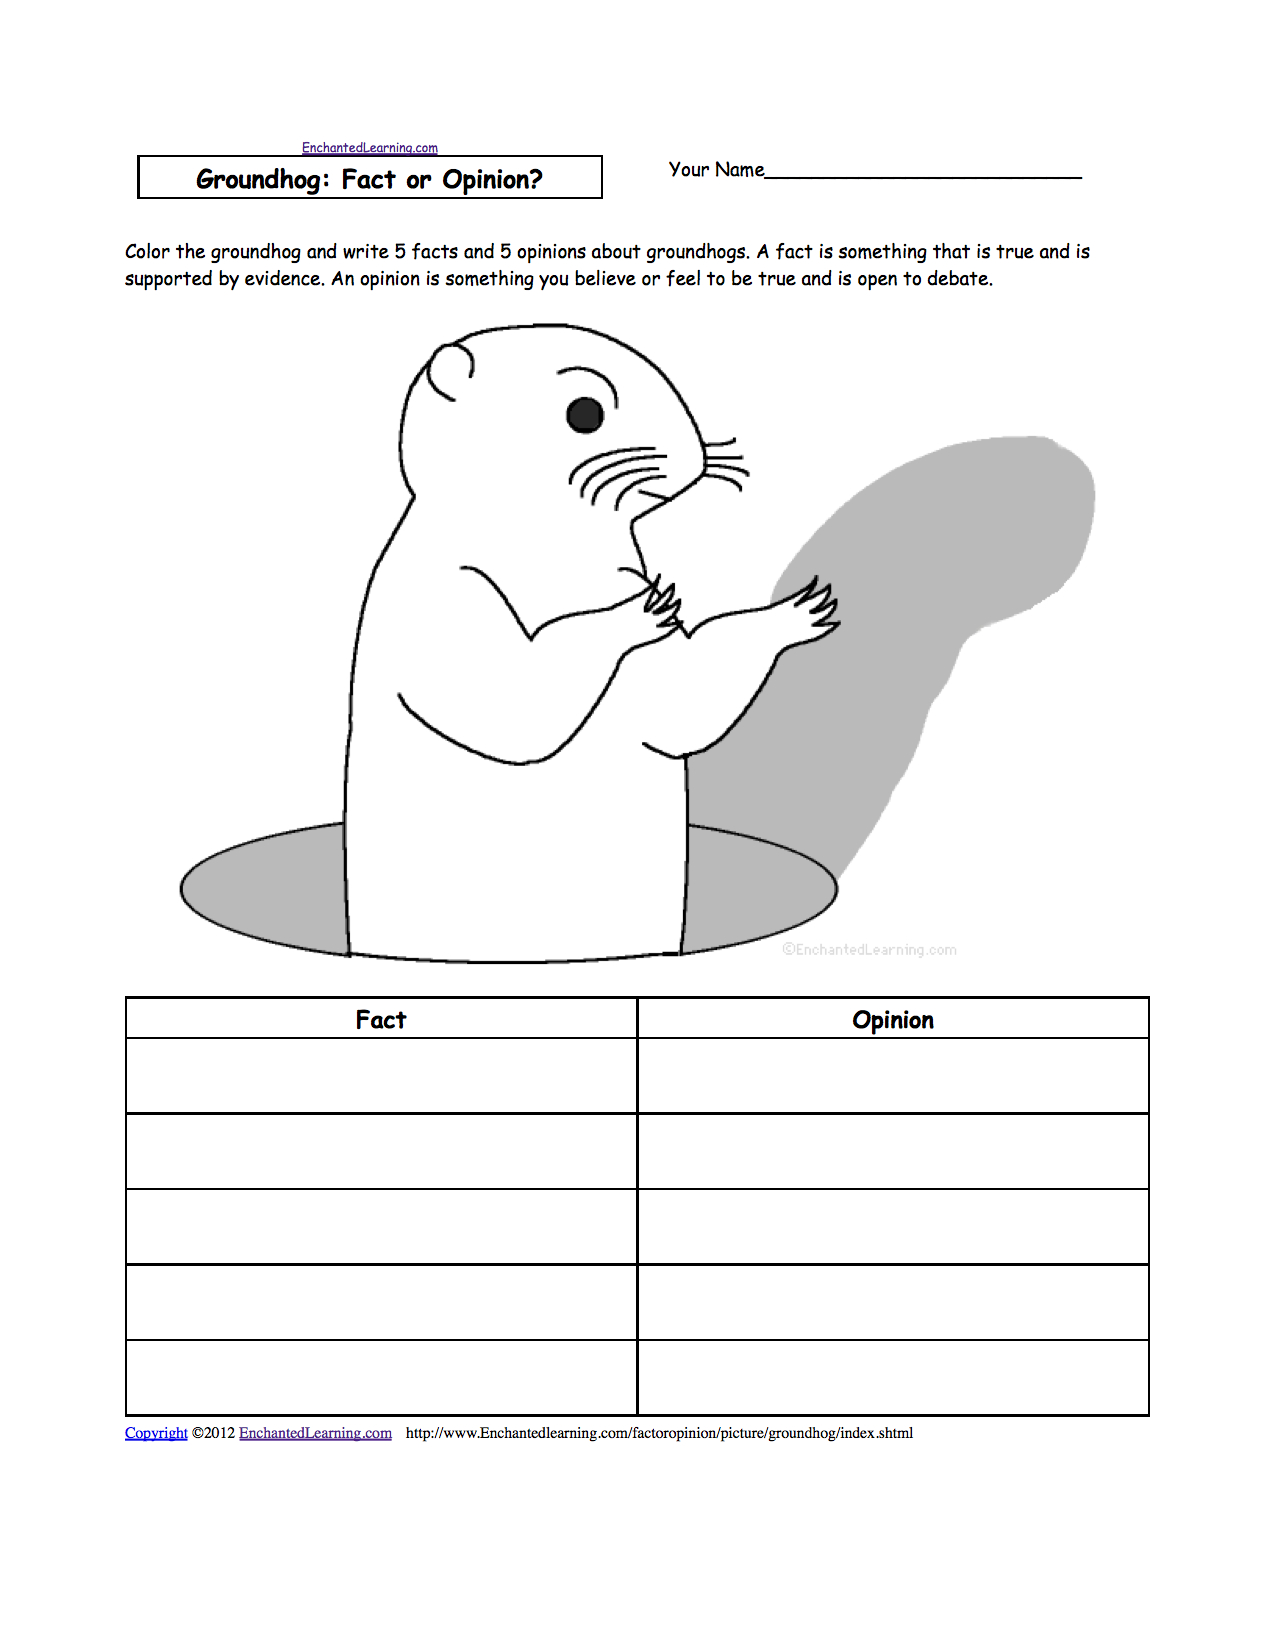 Groundhog Day Crafts, Worksheets And Printable Books - Free Printable Groundhog Day Booklet